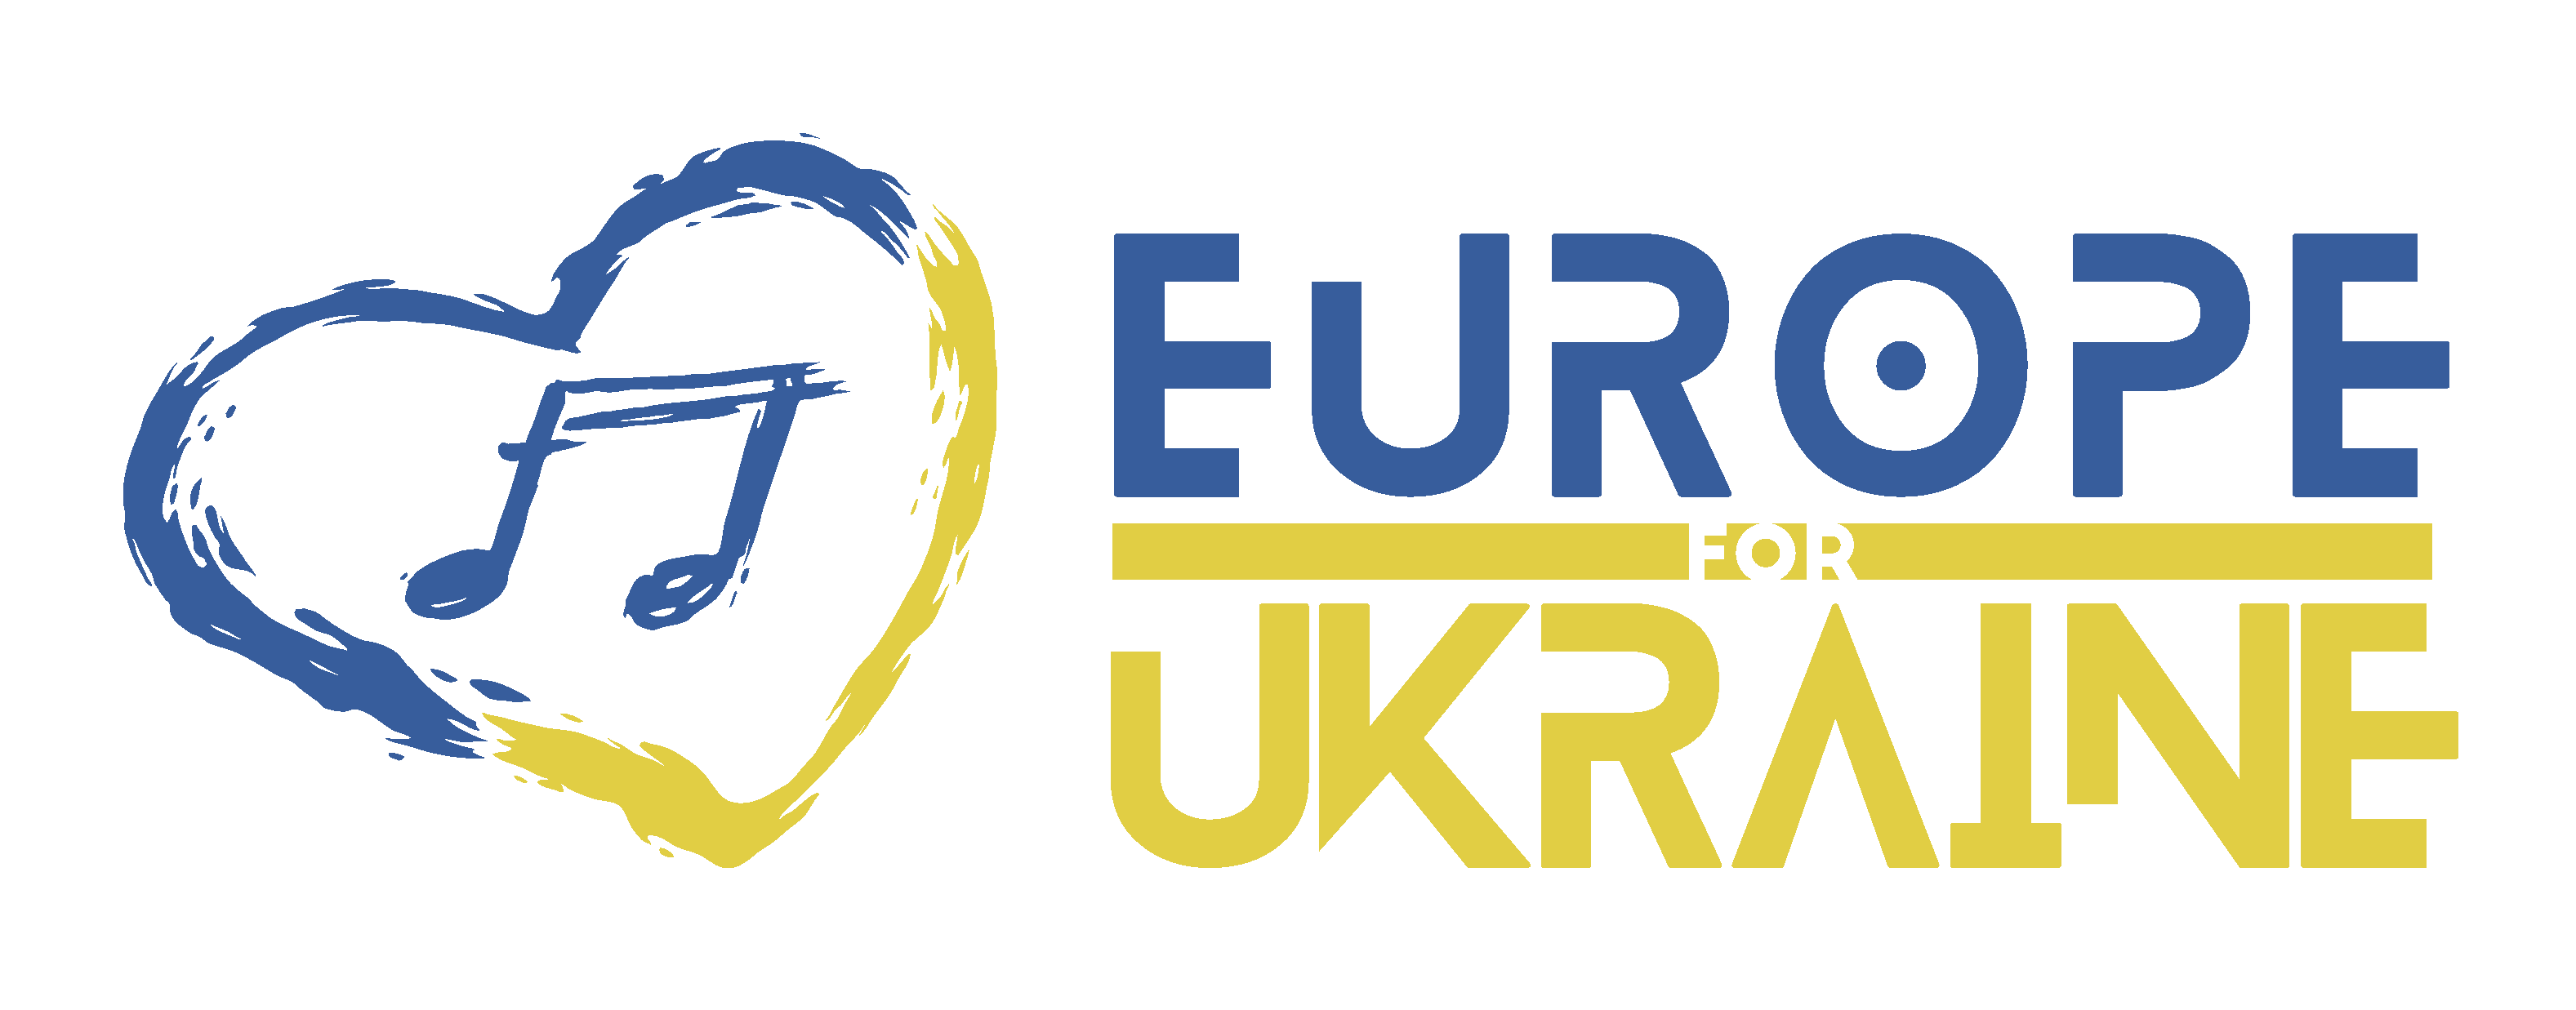 Europe for Ukraine - Test